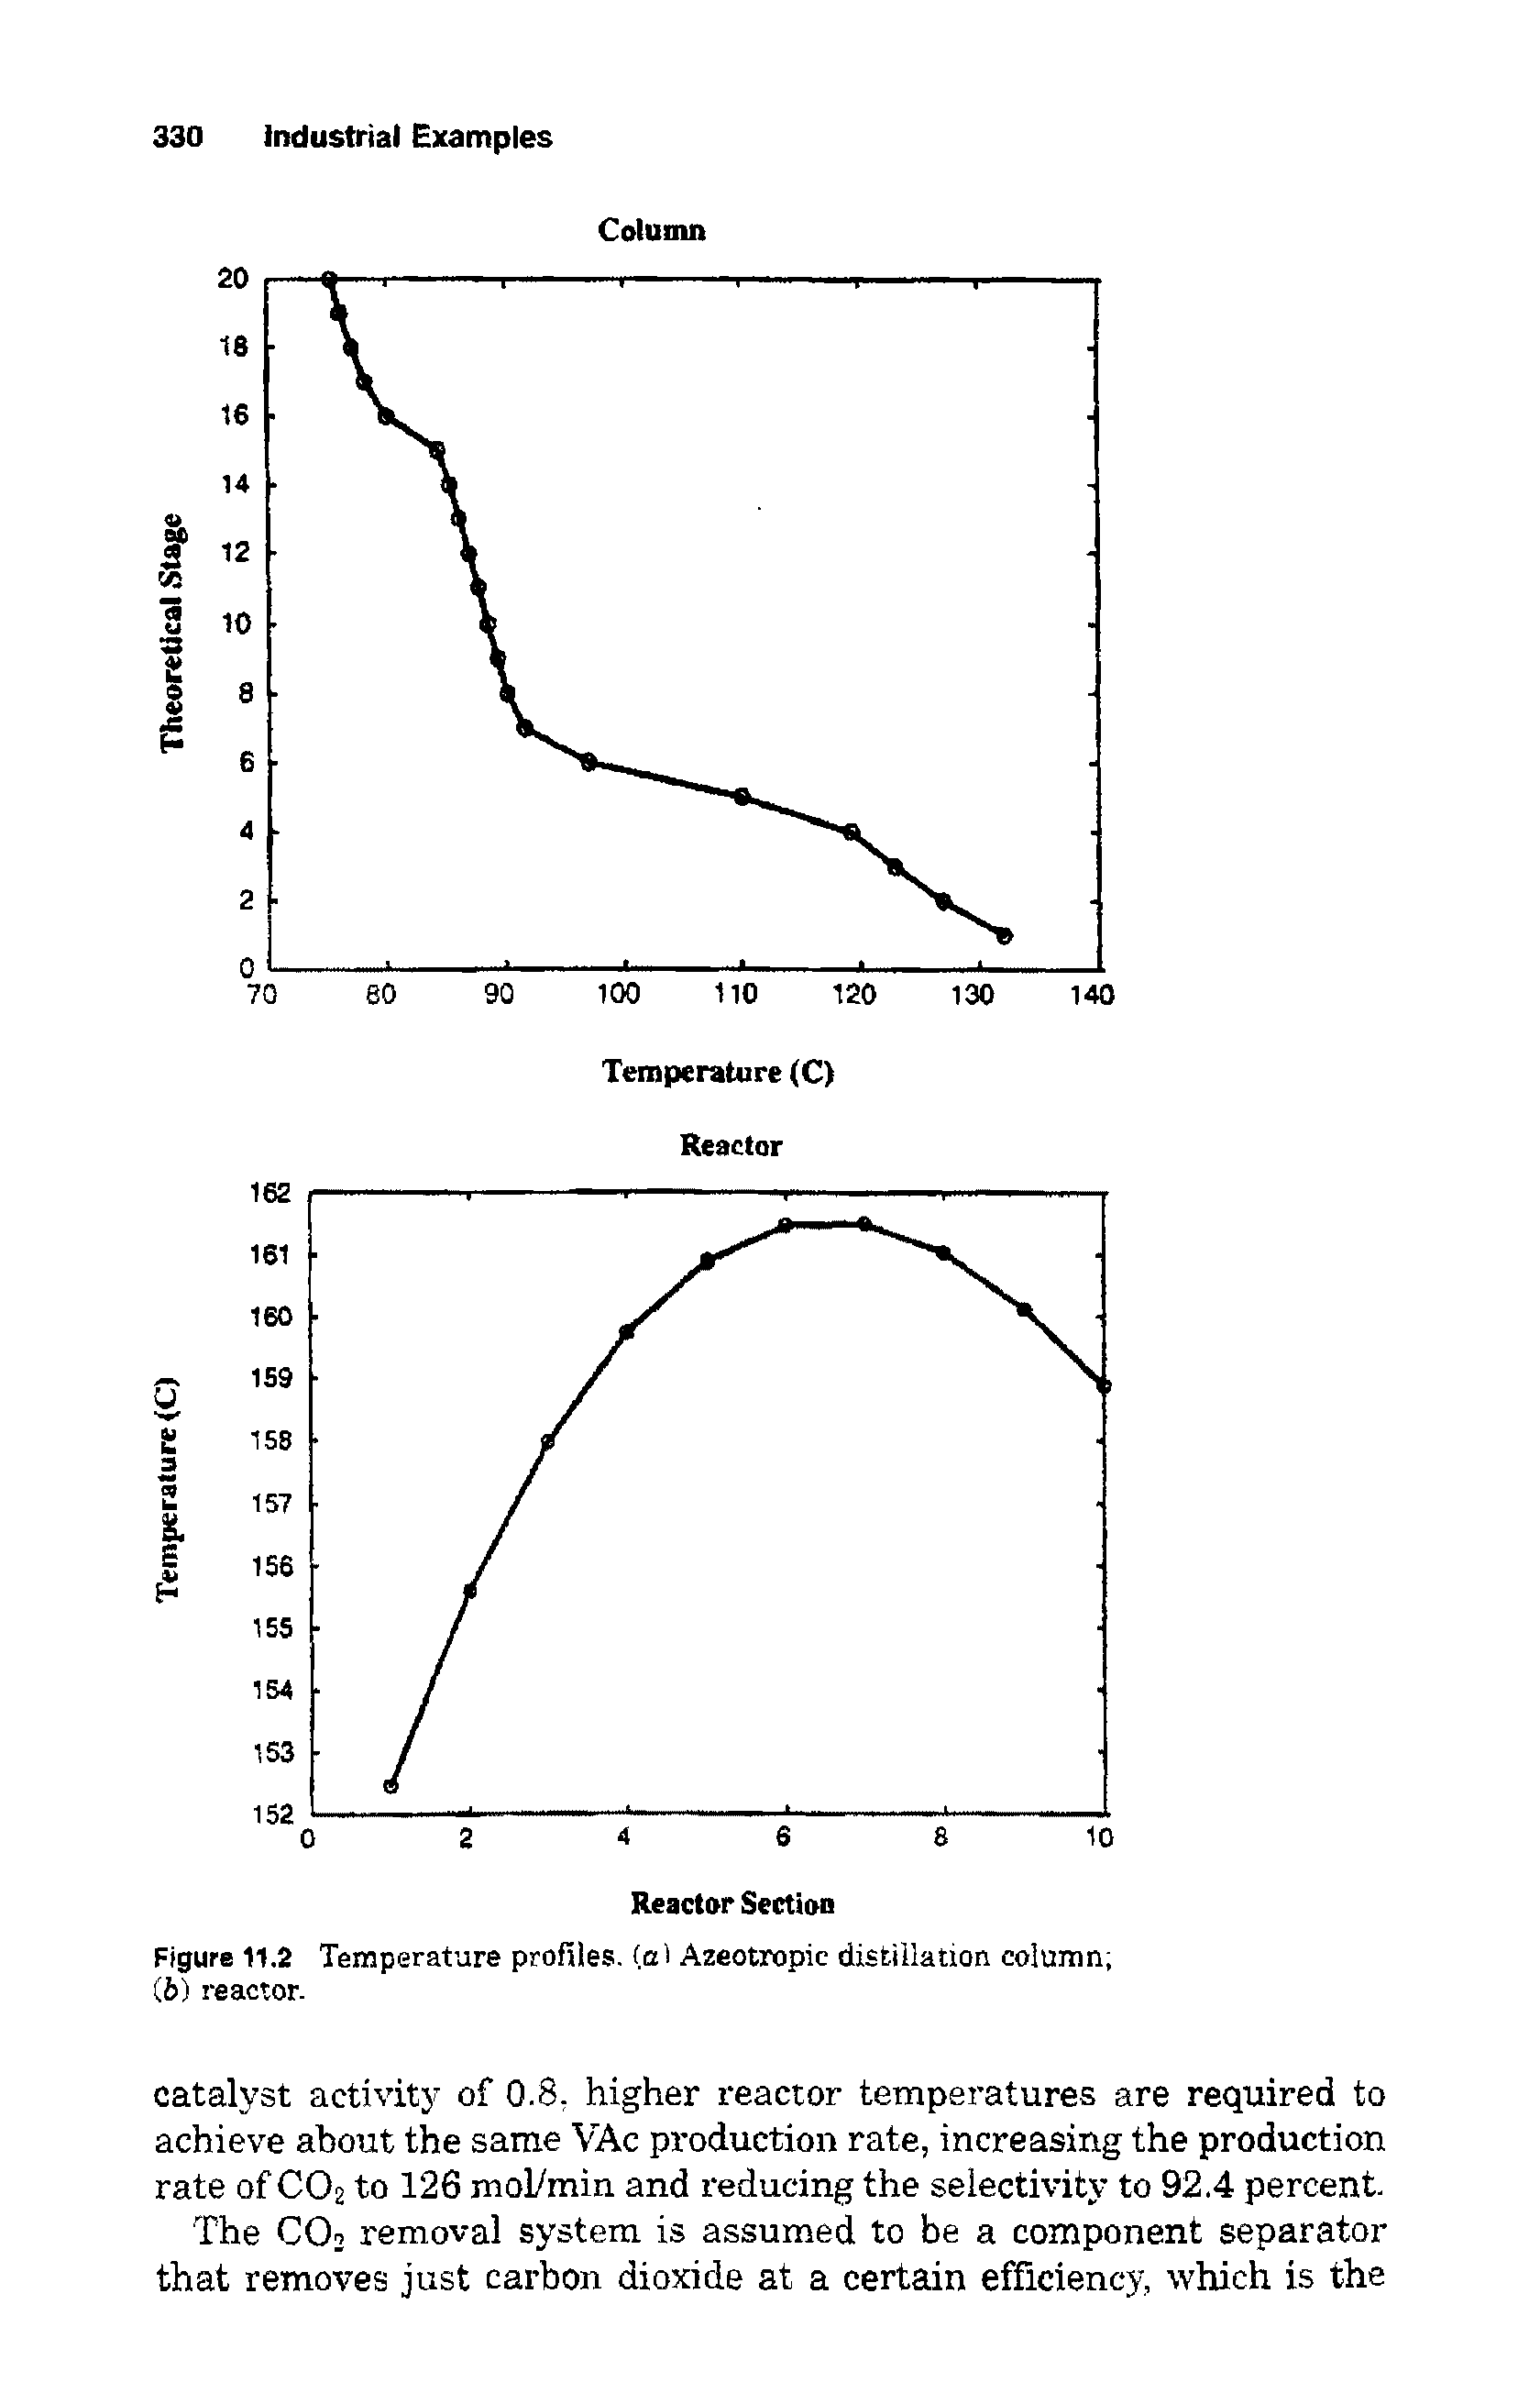 Figure 11.2 Temperature profiles, (at Azeotropic distillation column (b) reactor.